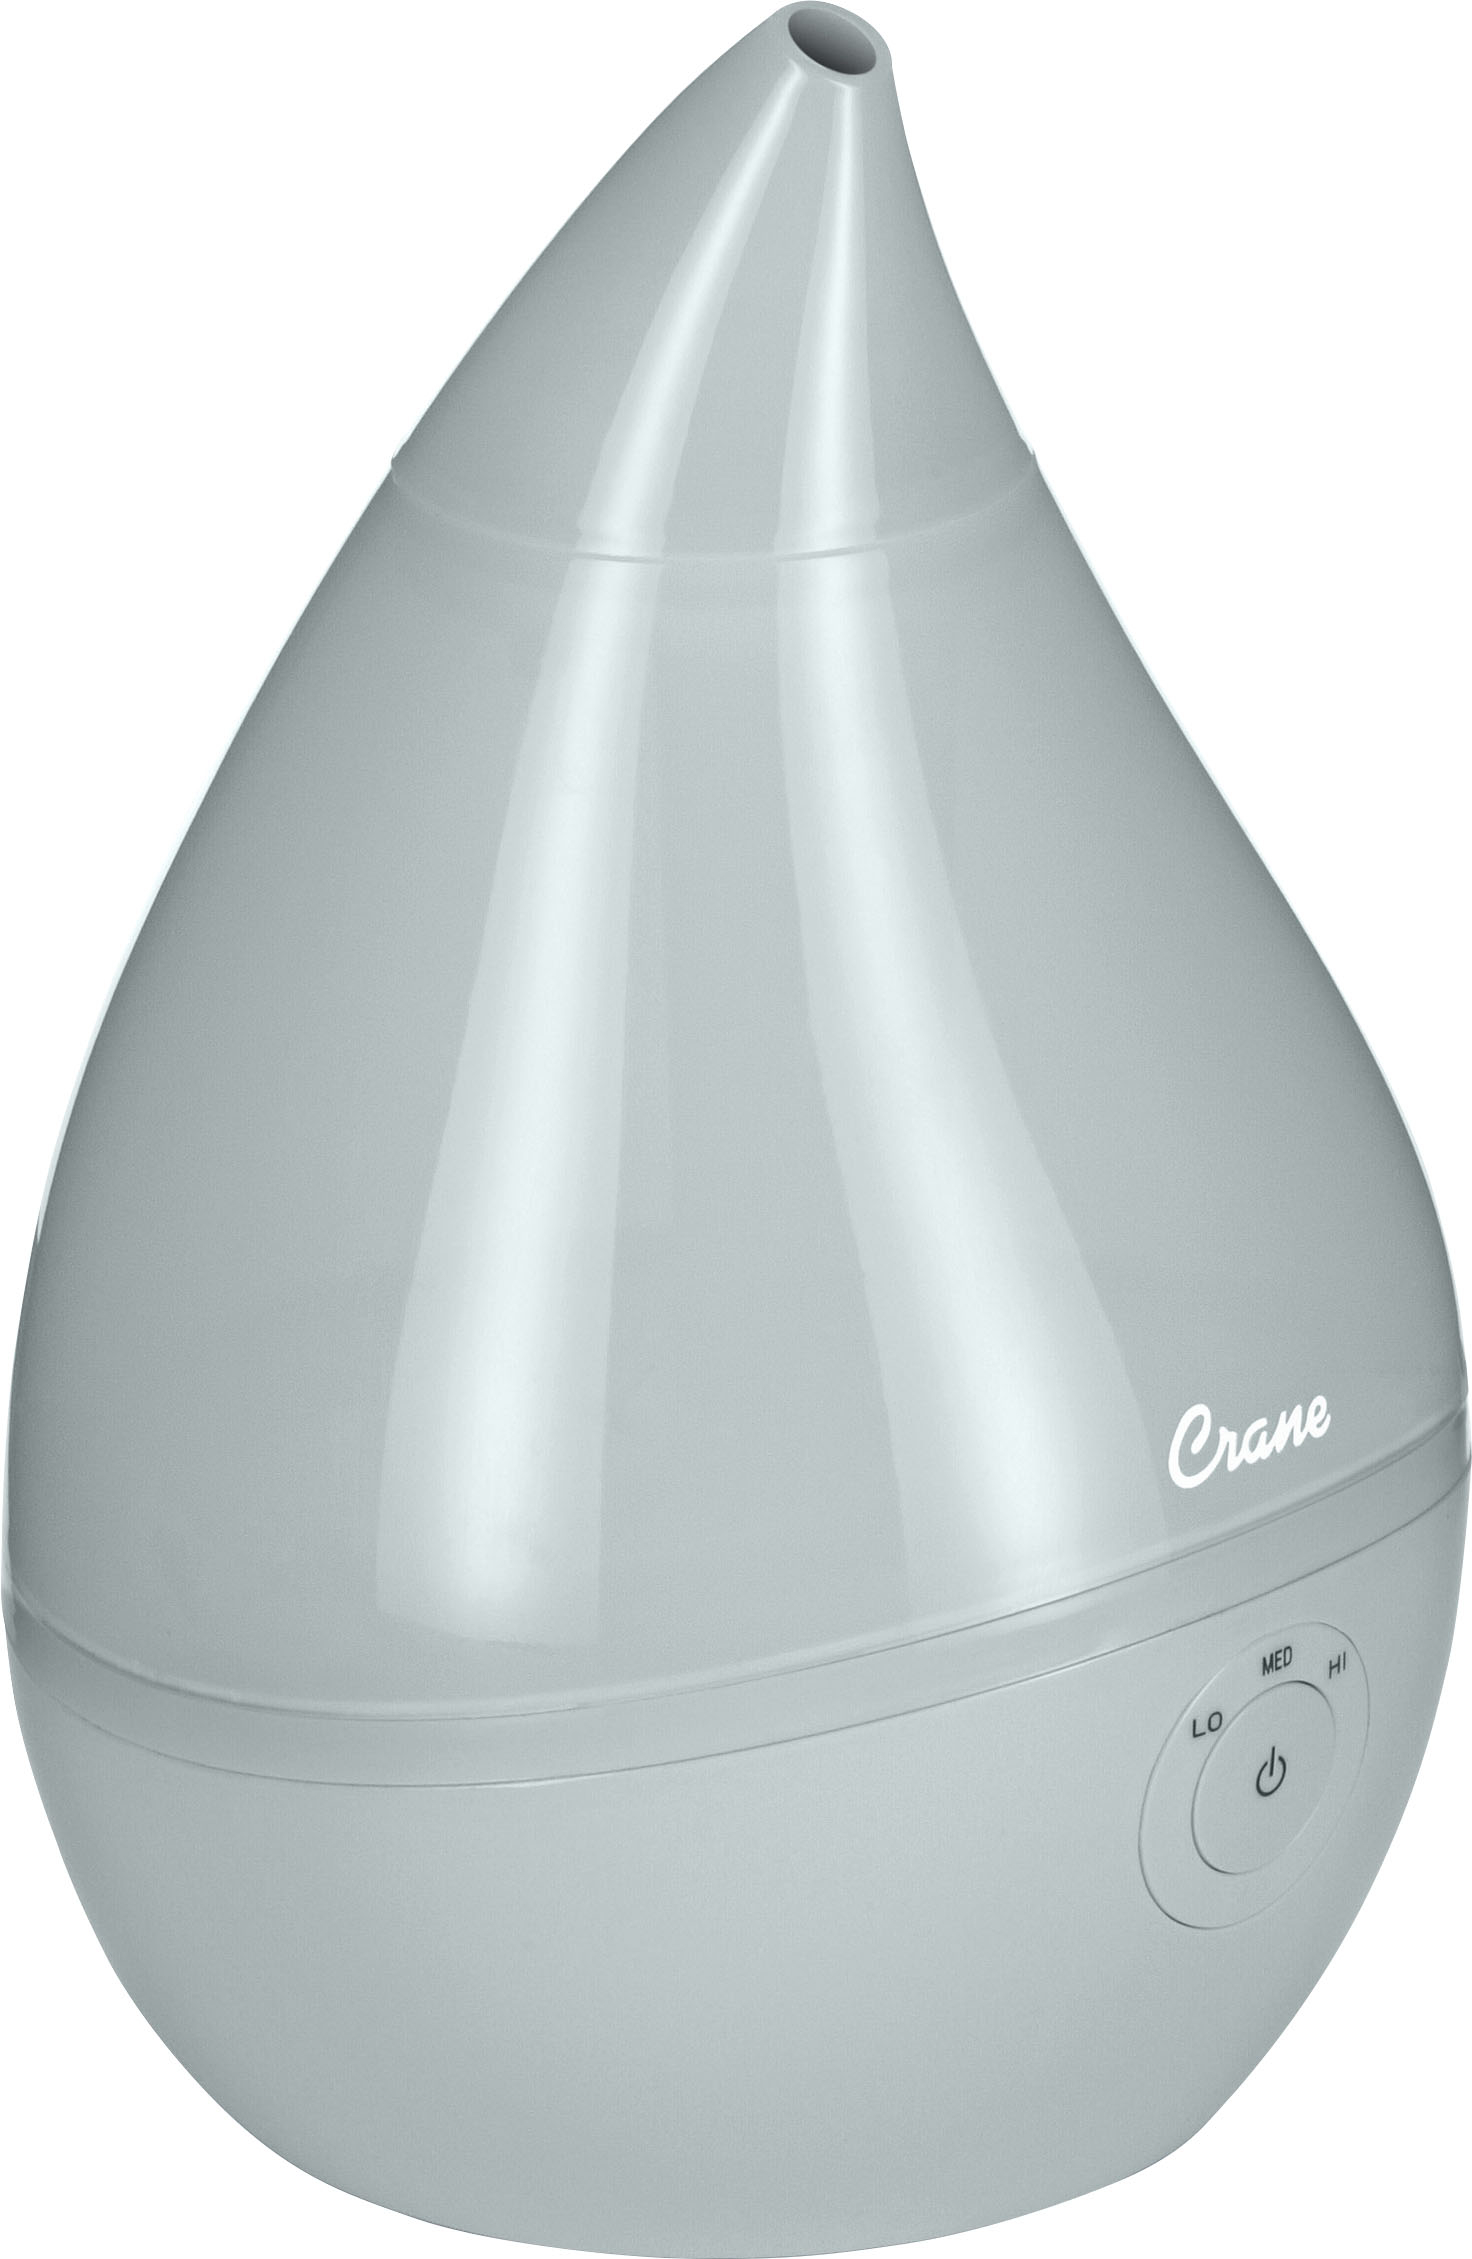 Angle View: CRANE - 0.5 Gal. Droplet Ultrasonic Cool Mist Humidifier - Gray